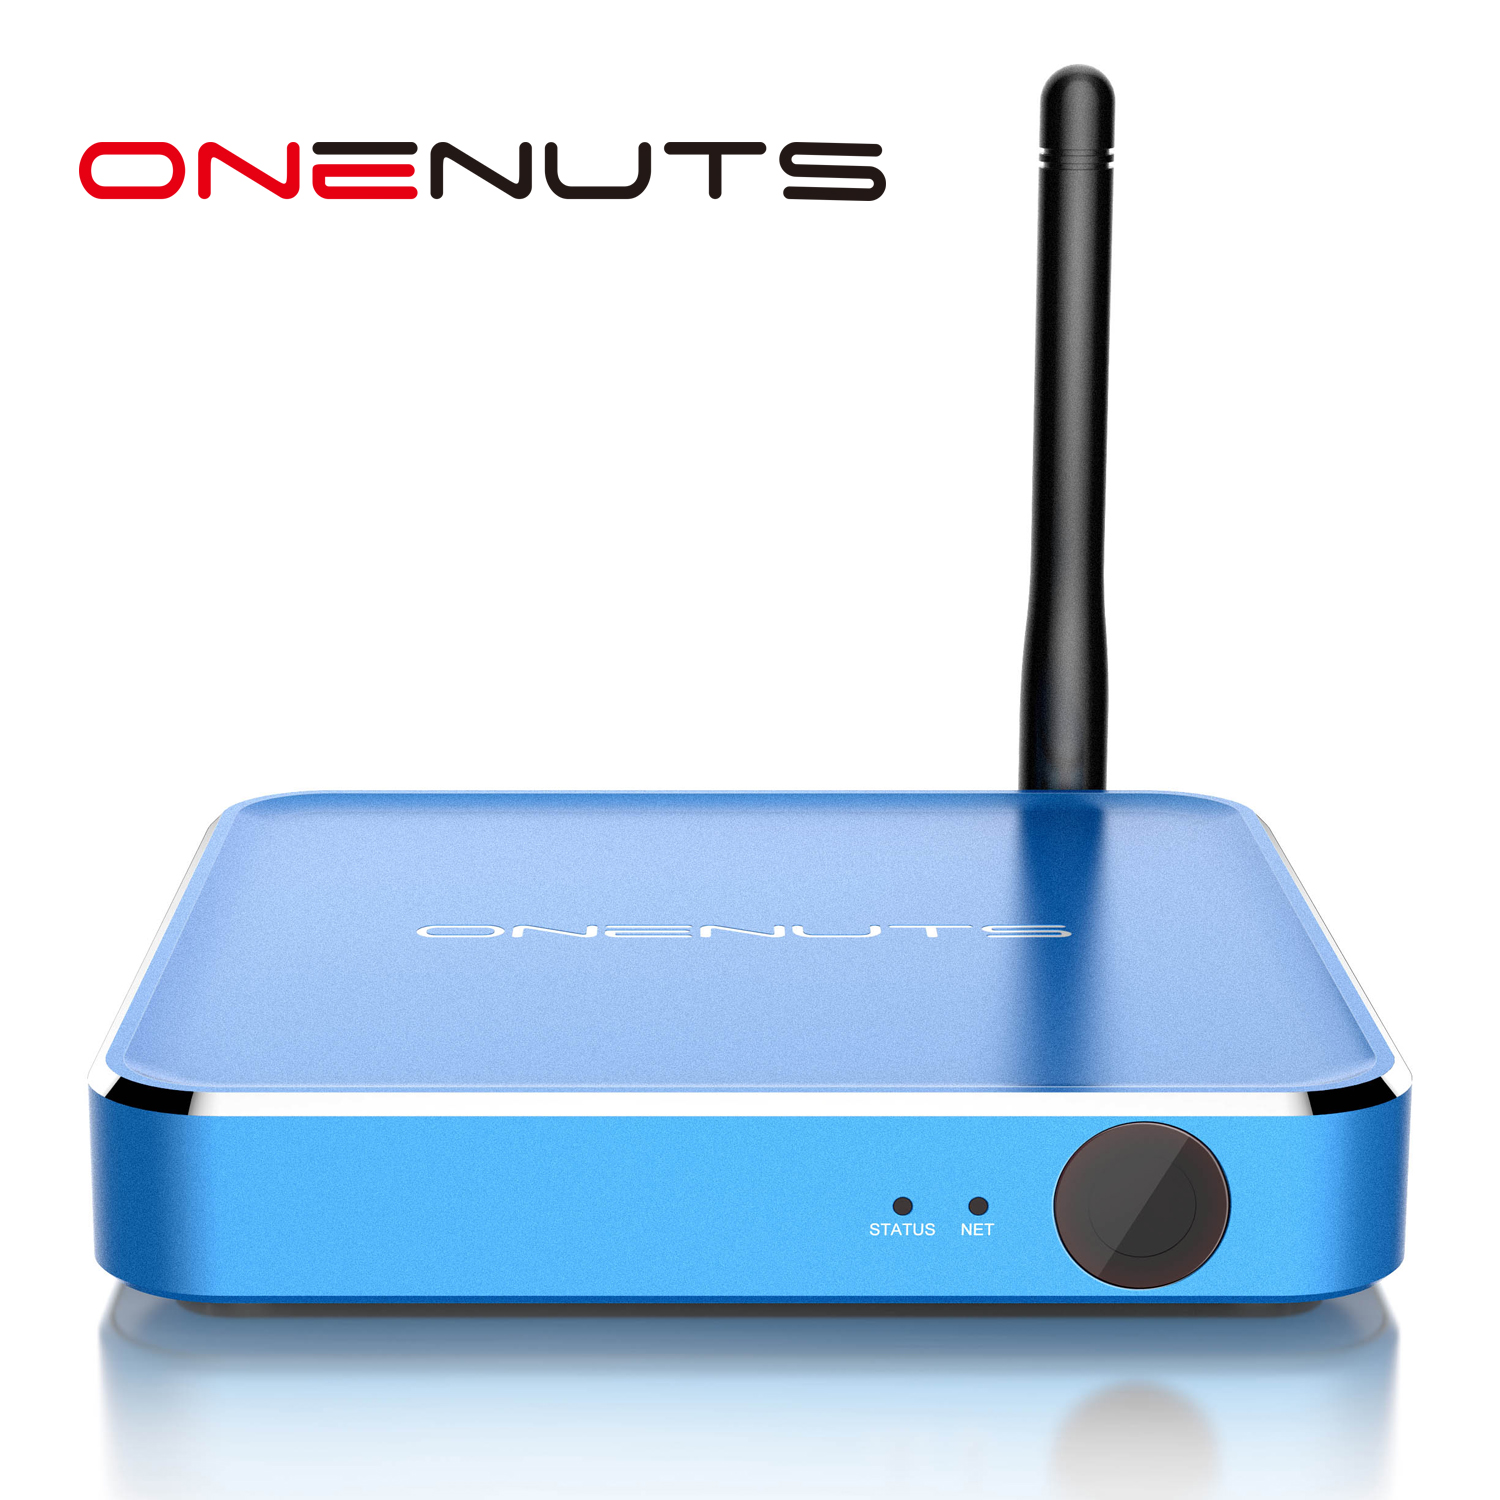 Android TV Box with Android 6.0, Android TV Box Wholesales Onenuts Nut 1 Blue